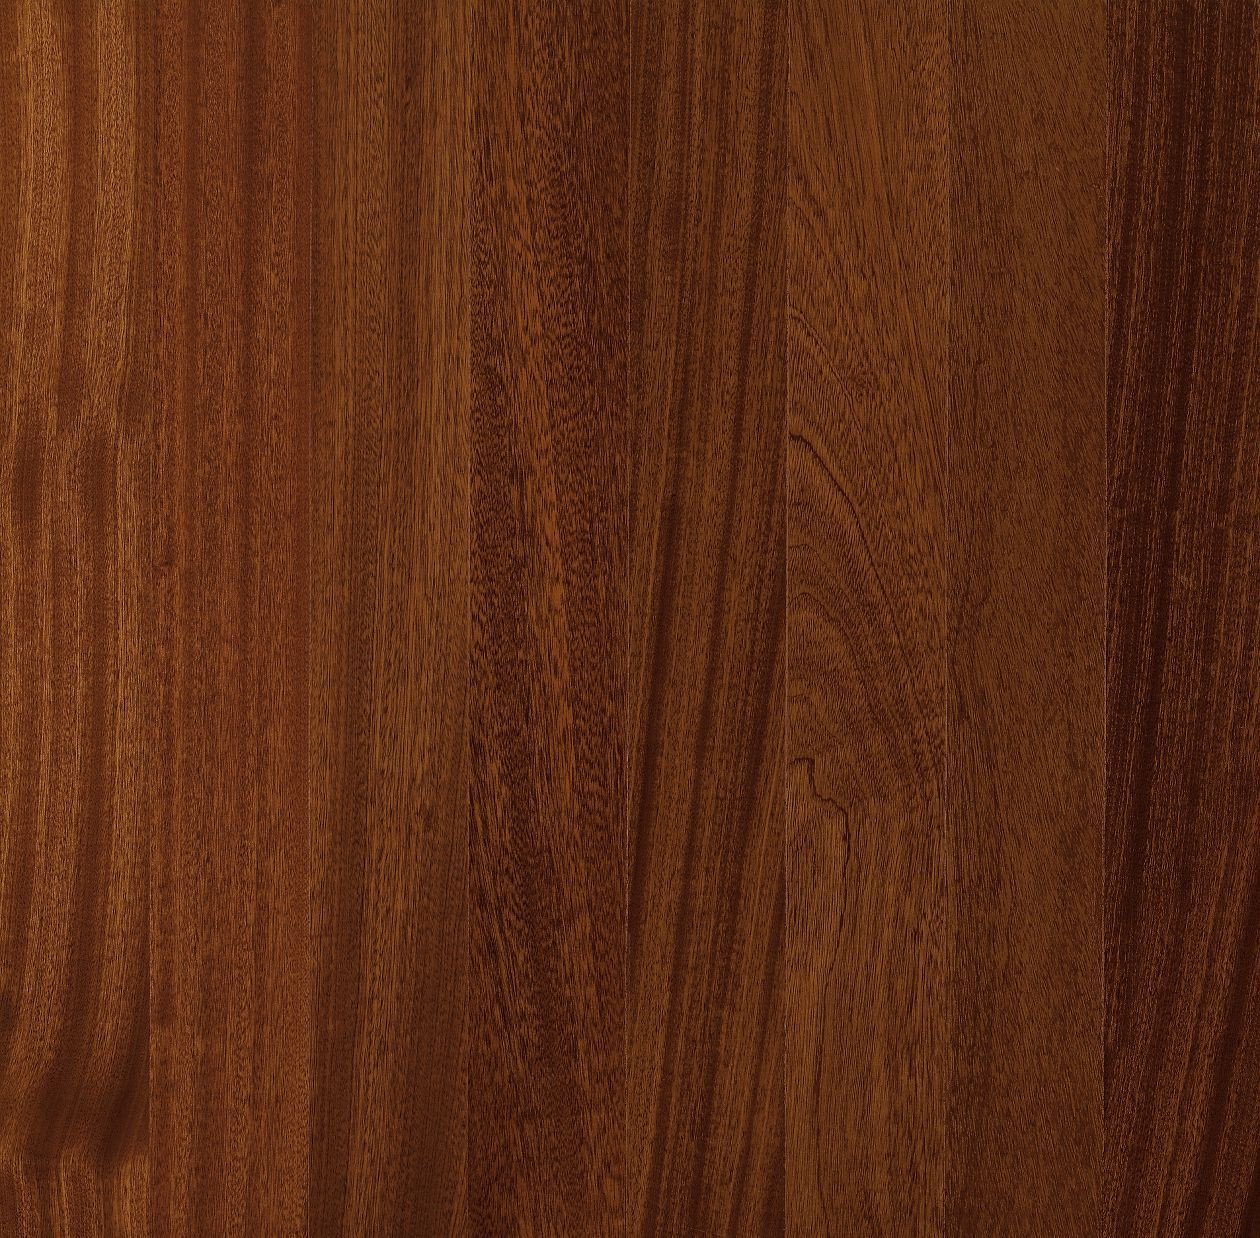 3mm engineered hardwood flooring of african mahogany african mahogany natural ege3204 hardwood inside african mahogany african mahogany natural ege3204 hardwood